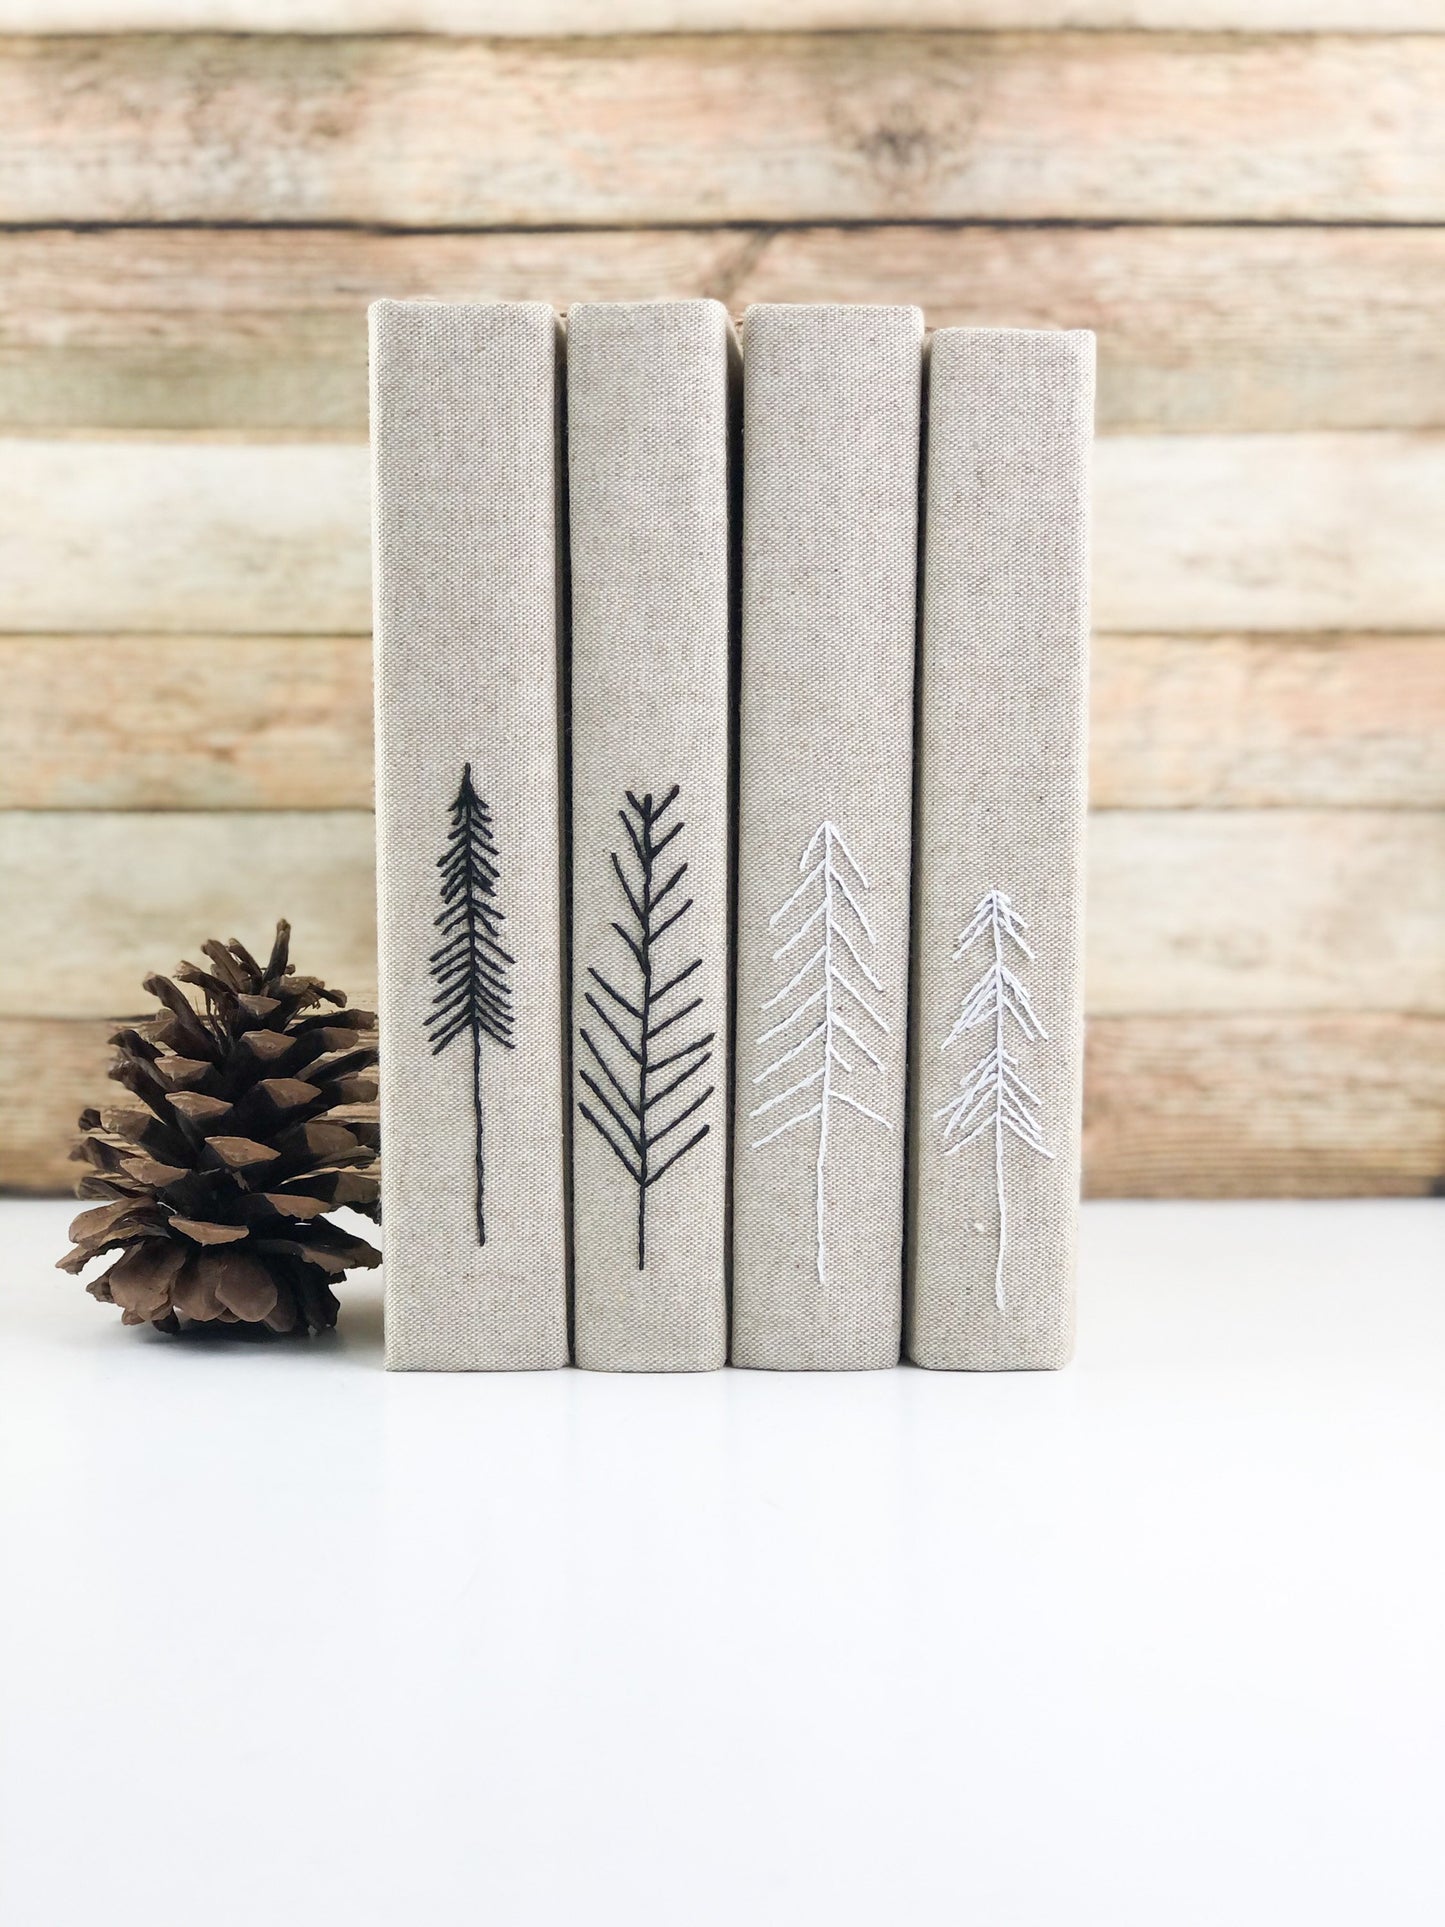 Christmas Tree Decor / Winter Shelf Decor / Decorative Books